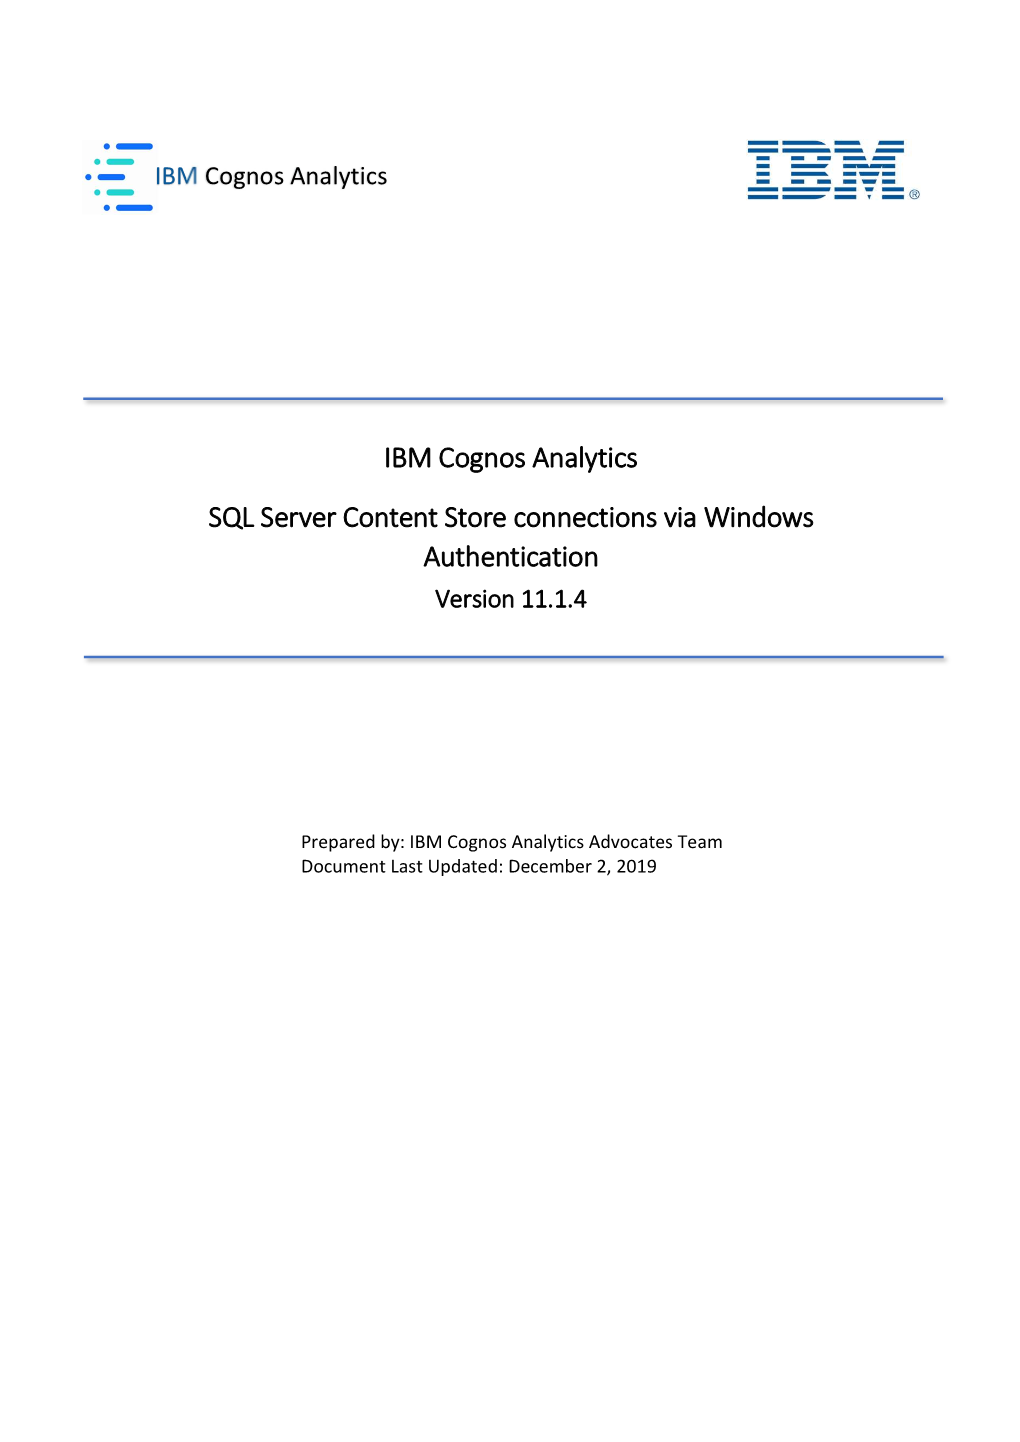 IBM Cognos Analytics SQL Server Content Store Connections Via Windows Authentication Version 11.1.4